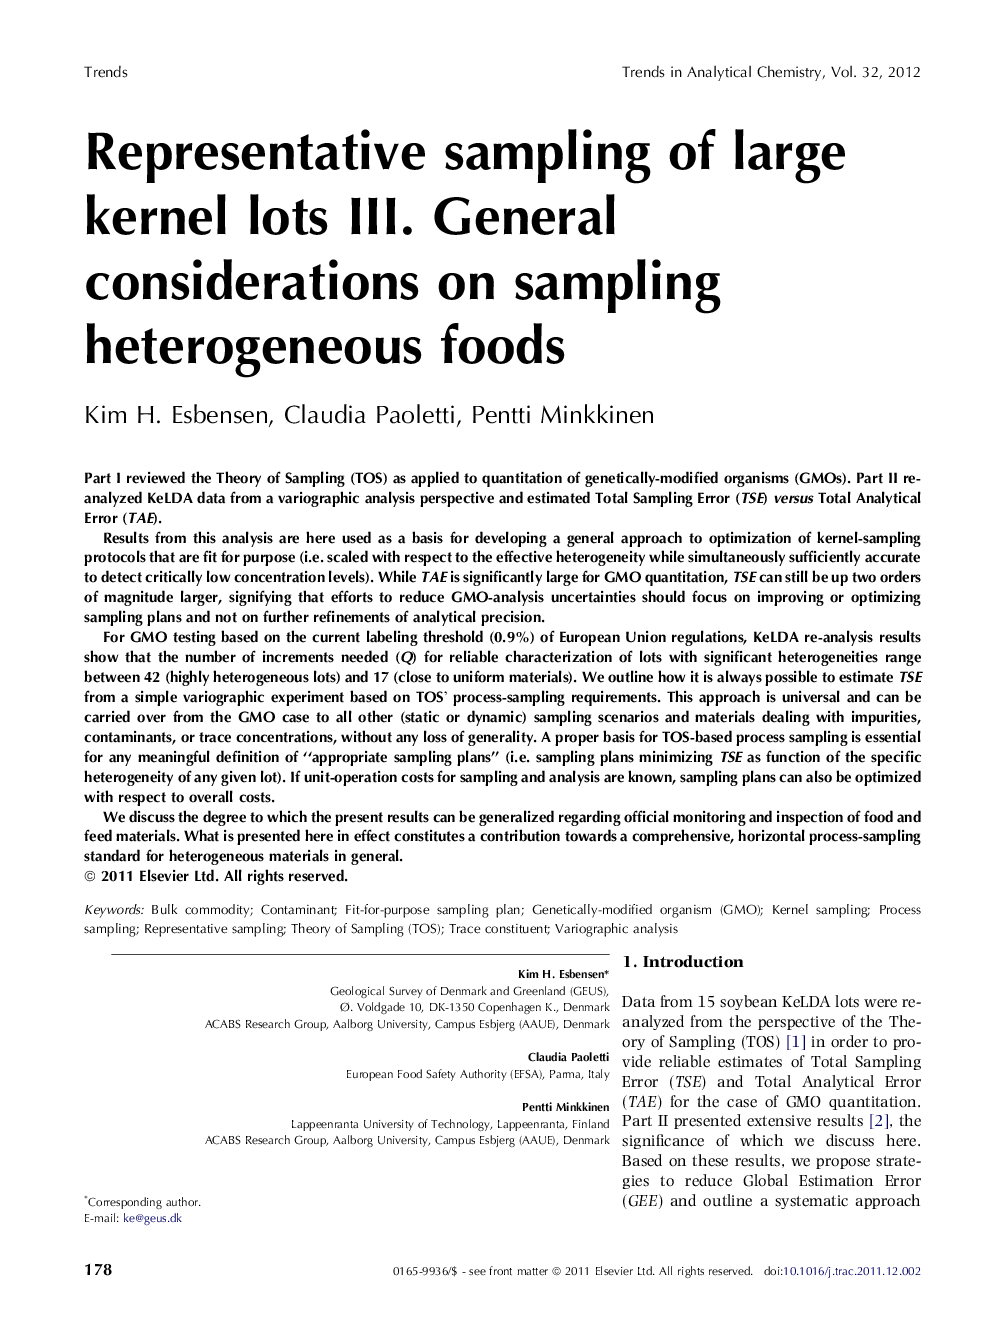 Representative sampling of large kernel lots III. General considerations on sampling heterogeneous foods